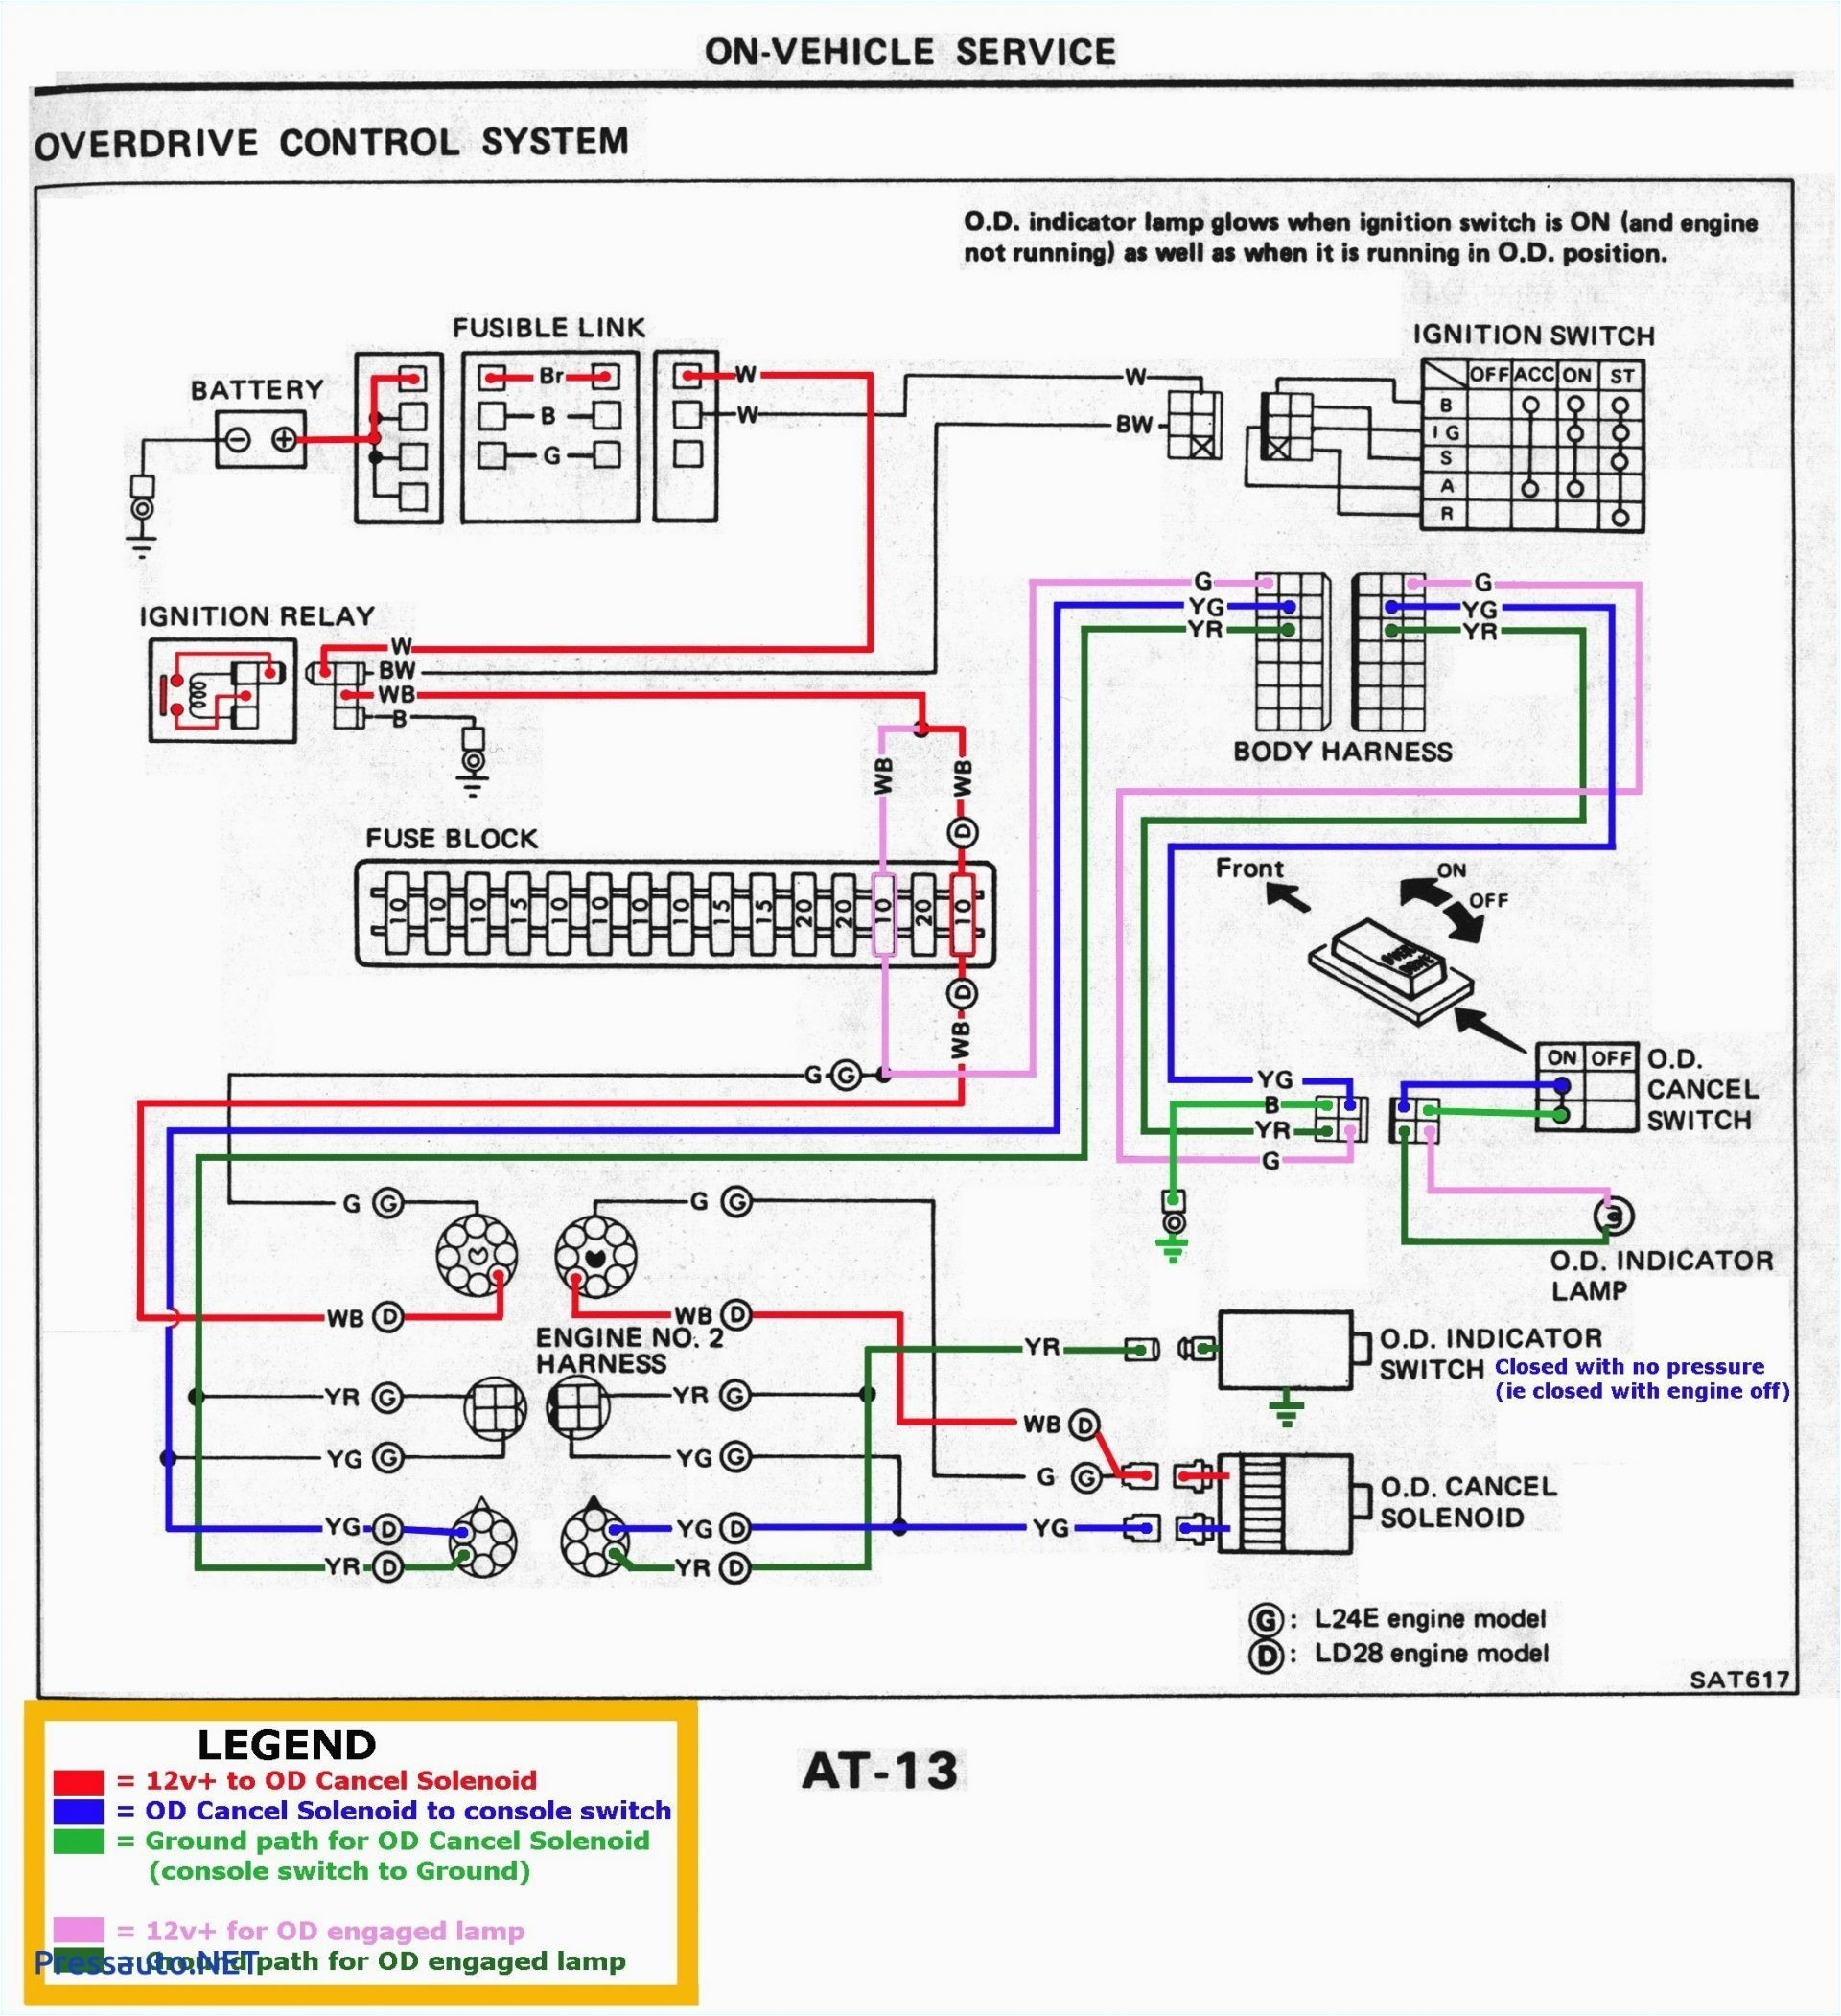 2000 dodge stratus cooling system diagram likewise subaru legacy honda civic radio wiring harness moreover dodge intrepid ac wiring